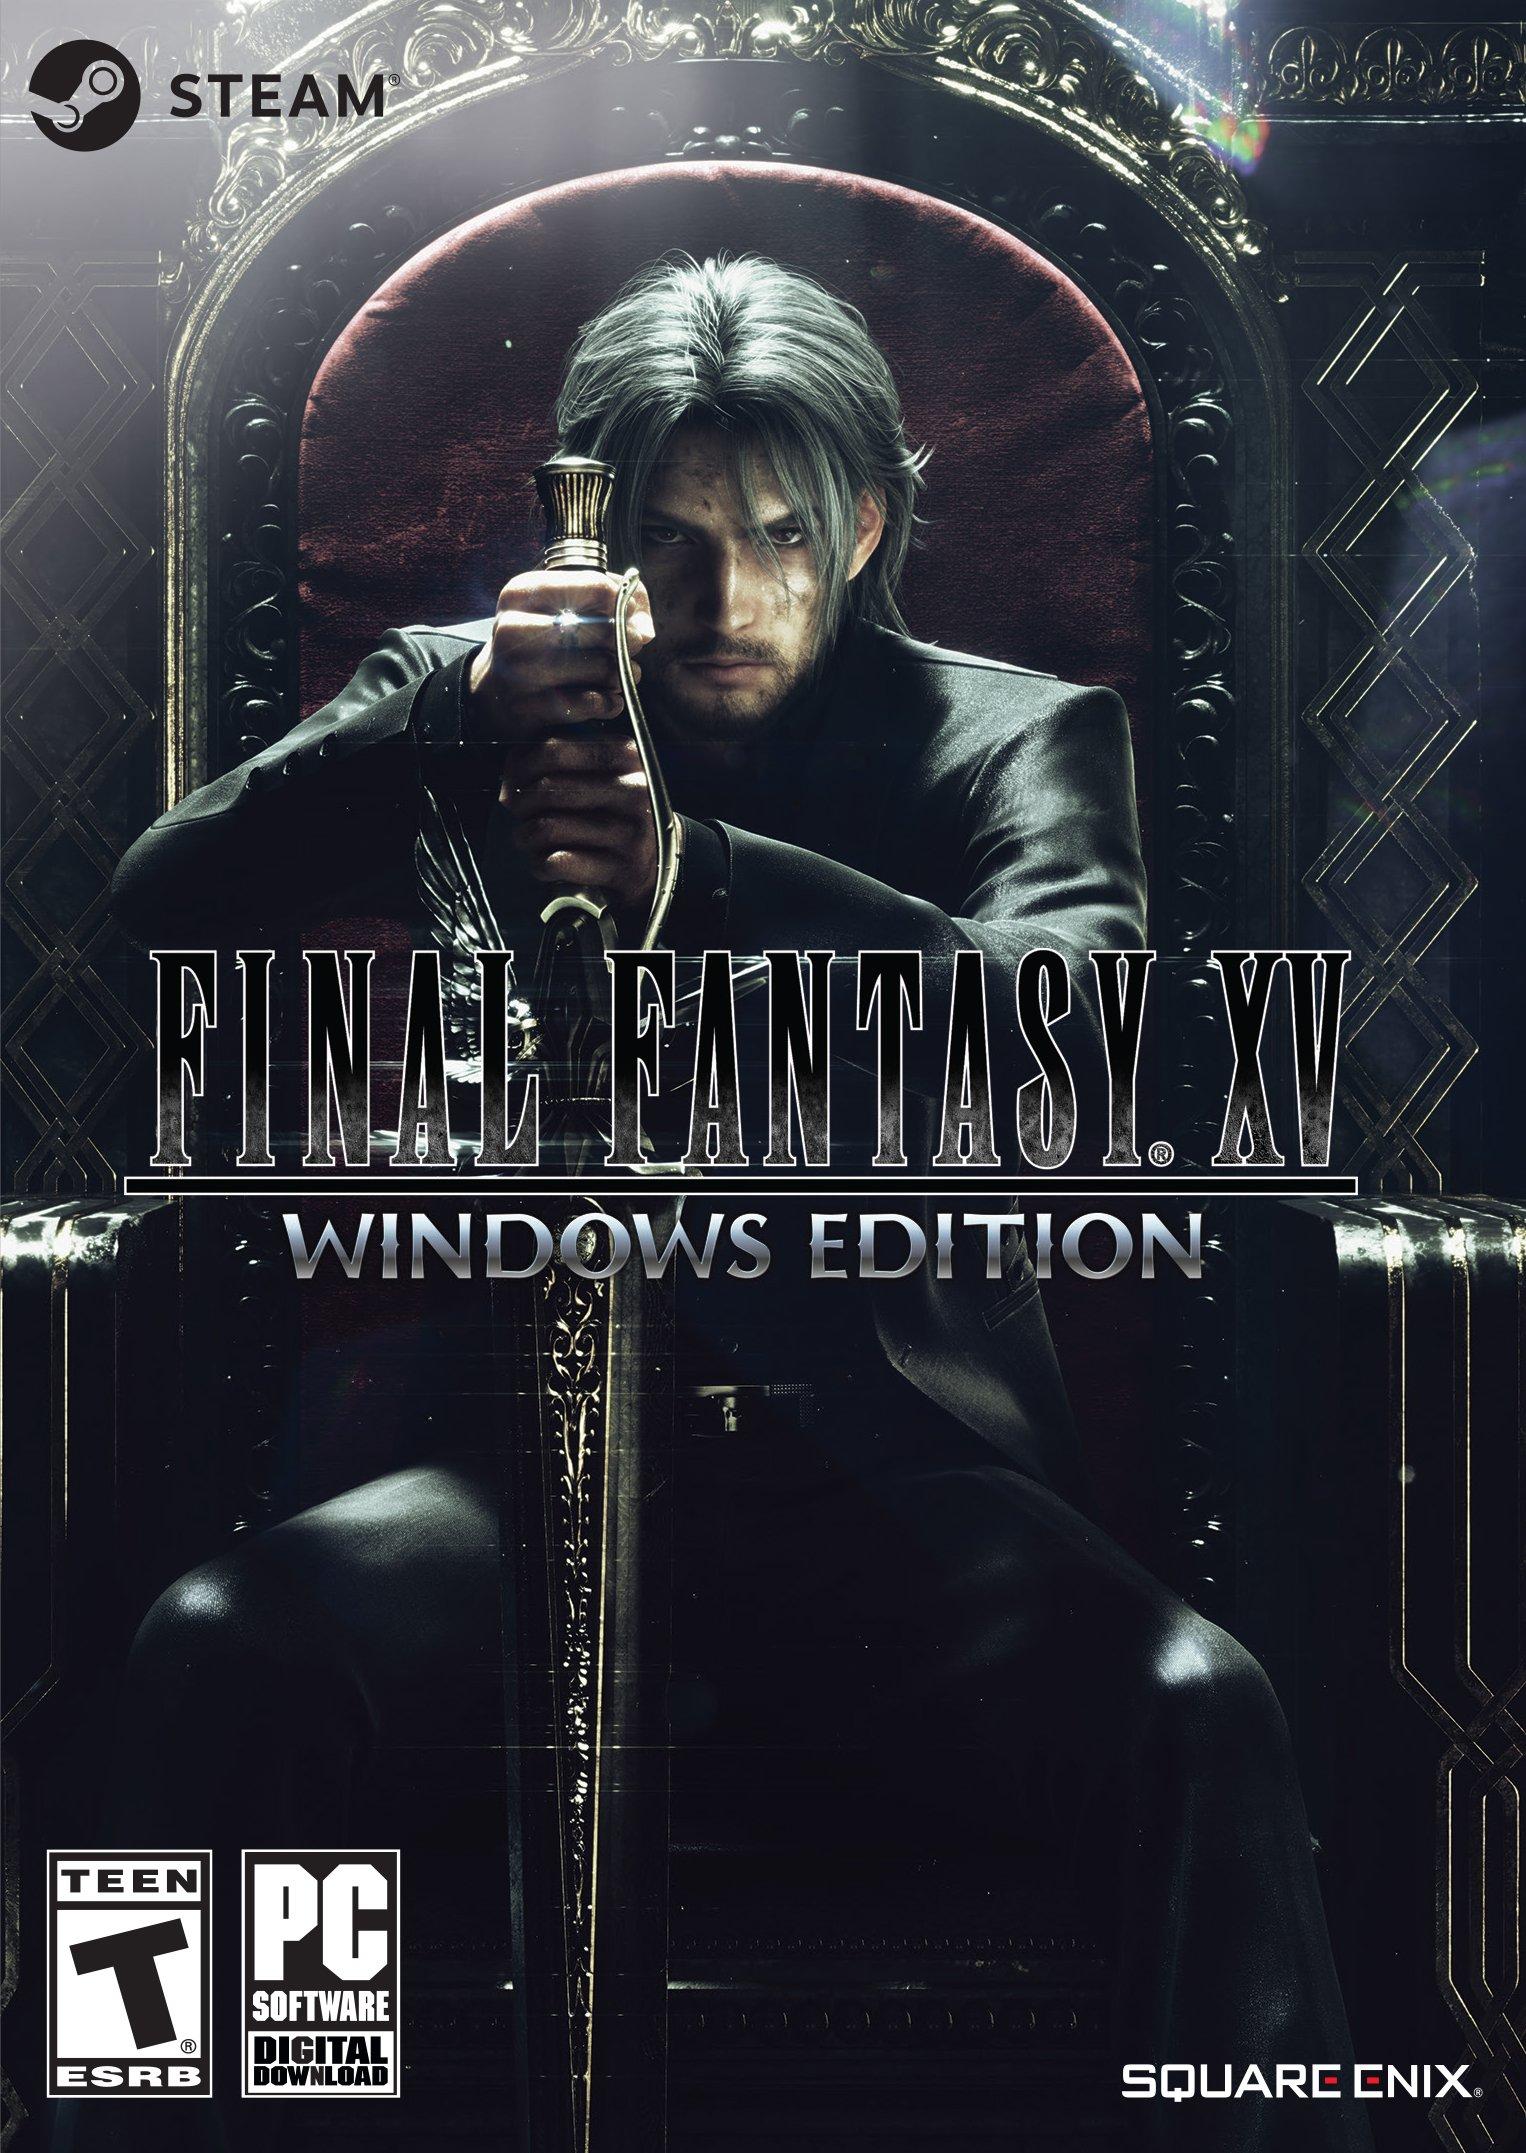  Final Fantasy XV Royal Edition - PlayStation 4 : Square Enix  LLC: Everything Else